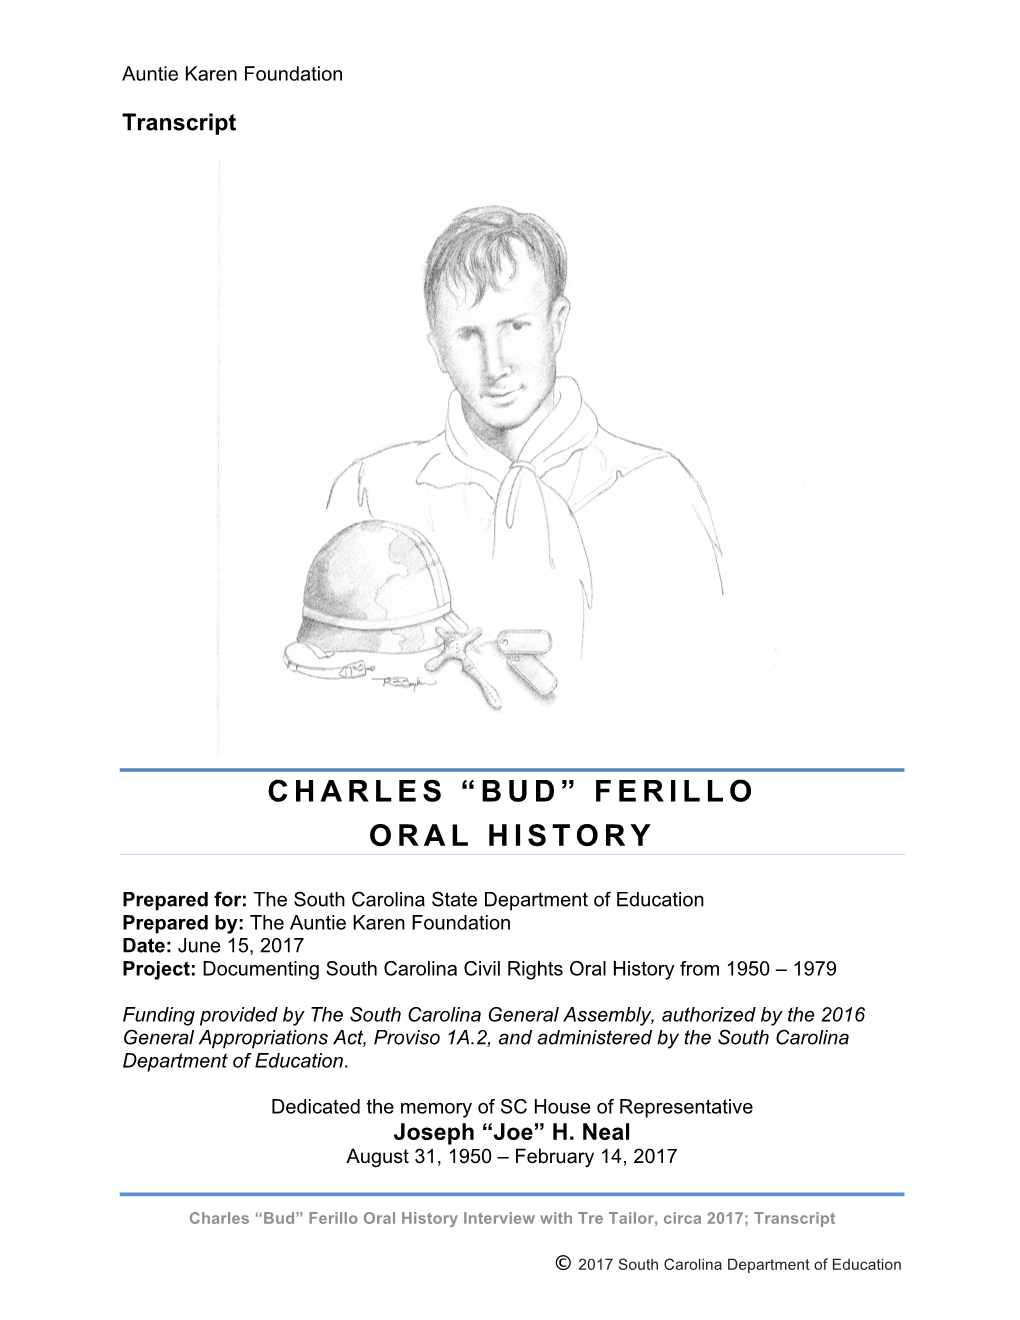 Charles “Bud” Ferillo Oral History